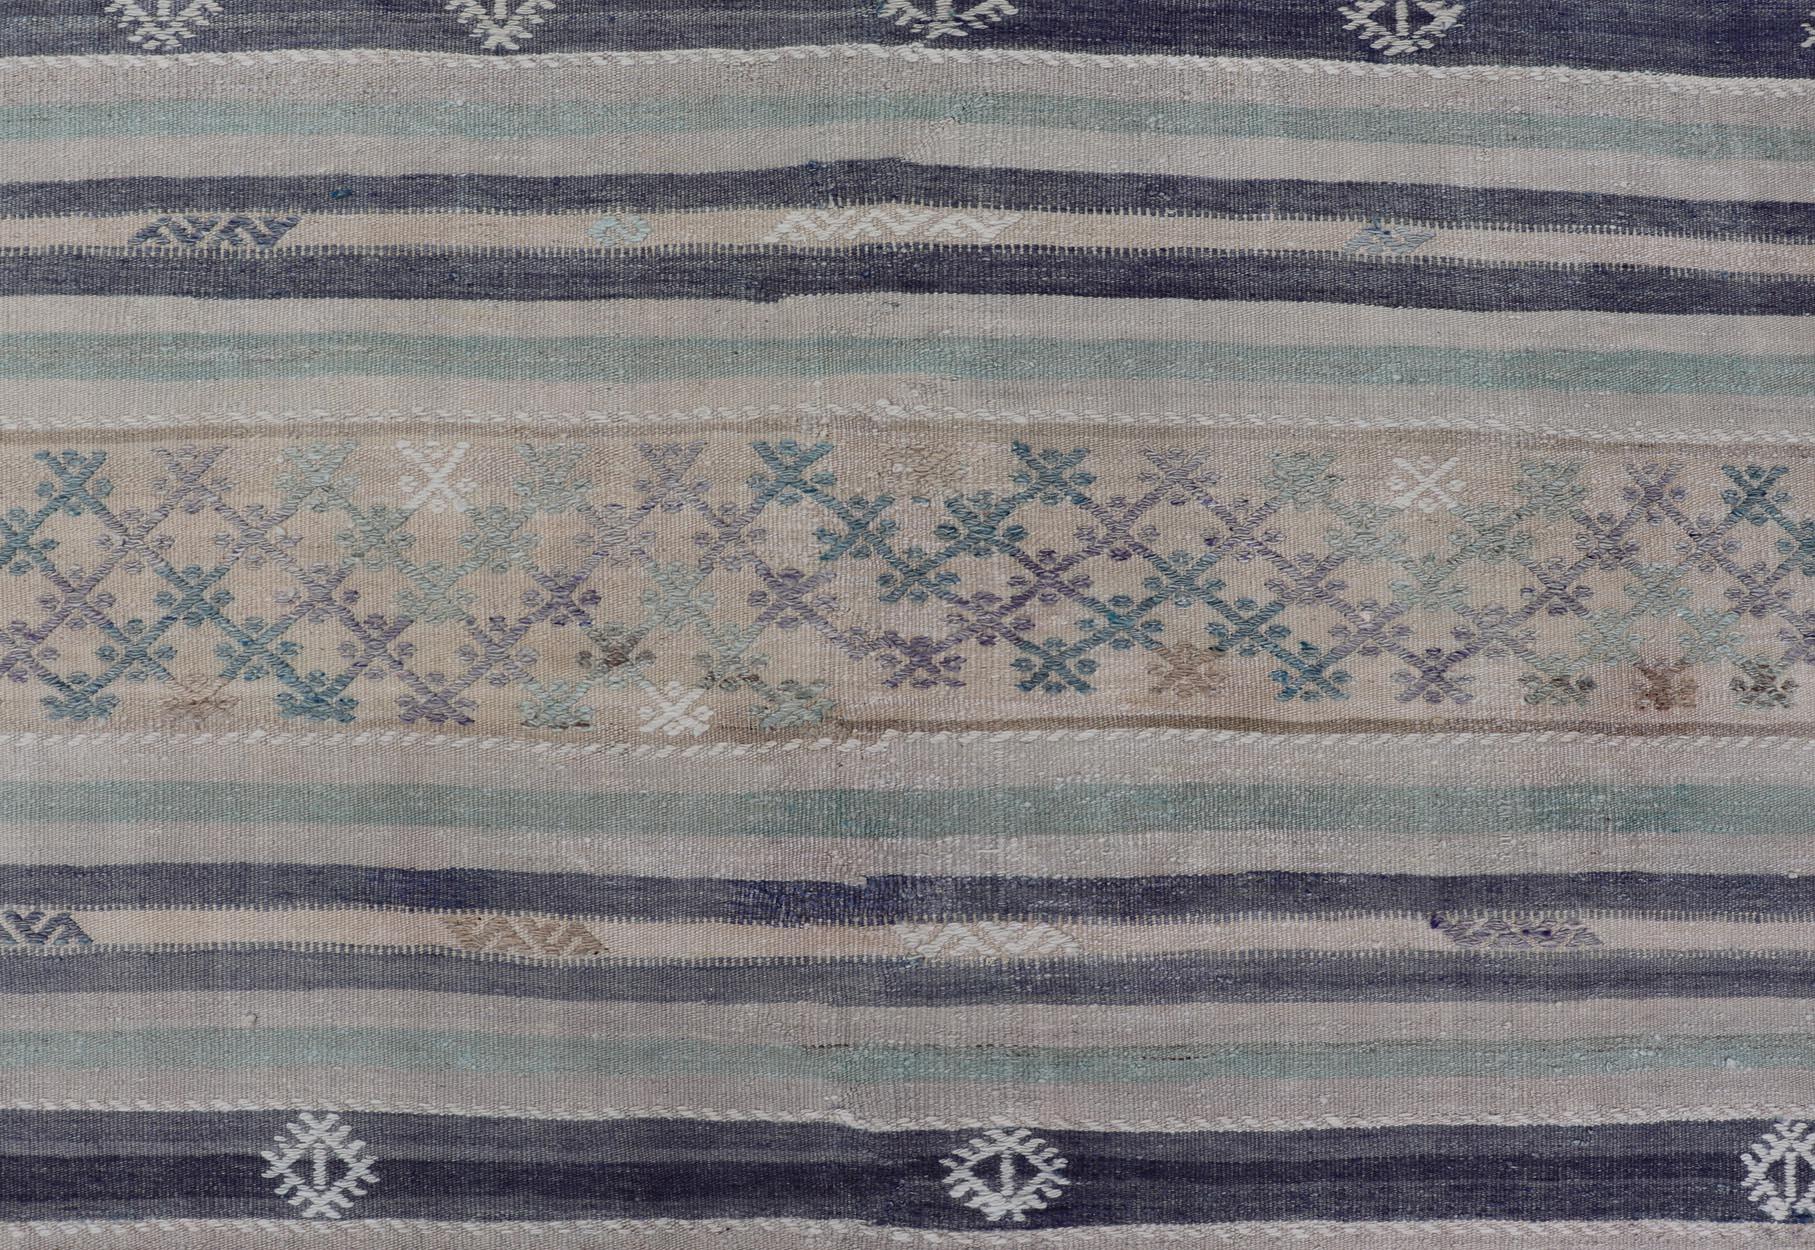 Hand-Woven Vintage Turkish Flat-Weave L. Green, Taupe, butter, Lavender & Ink Blue For Sale